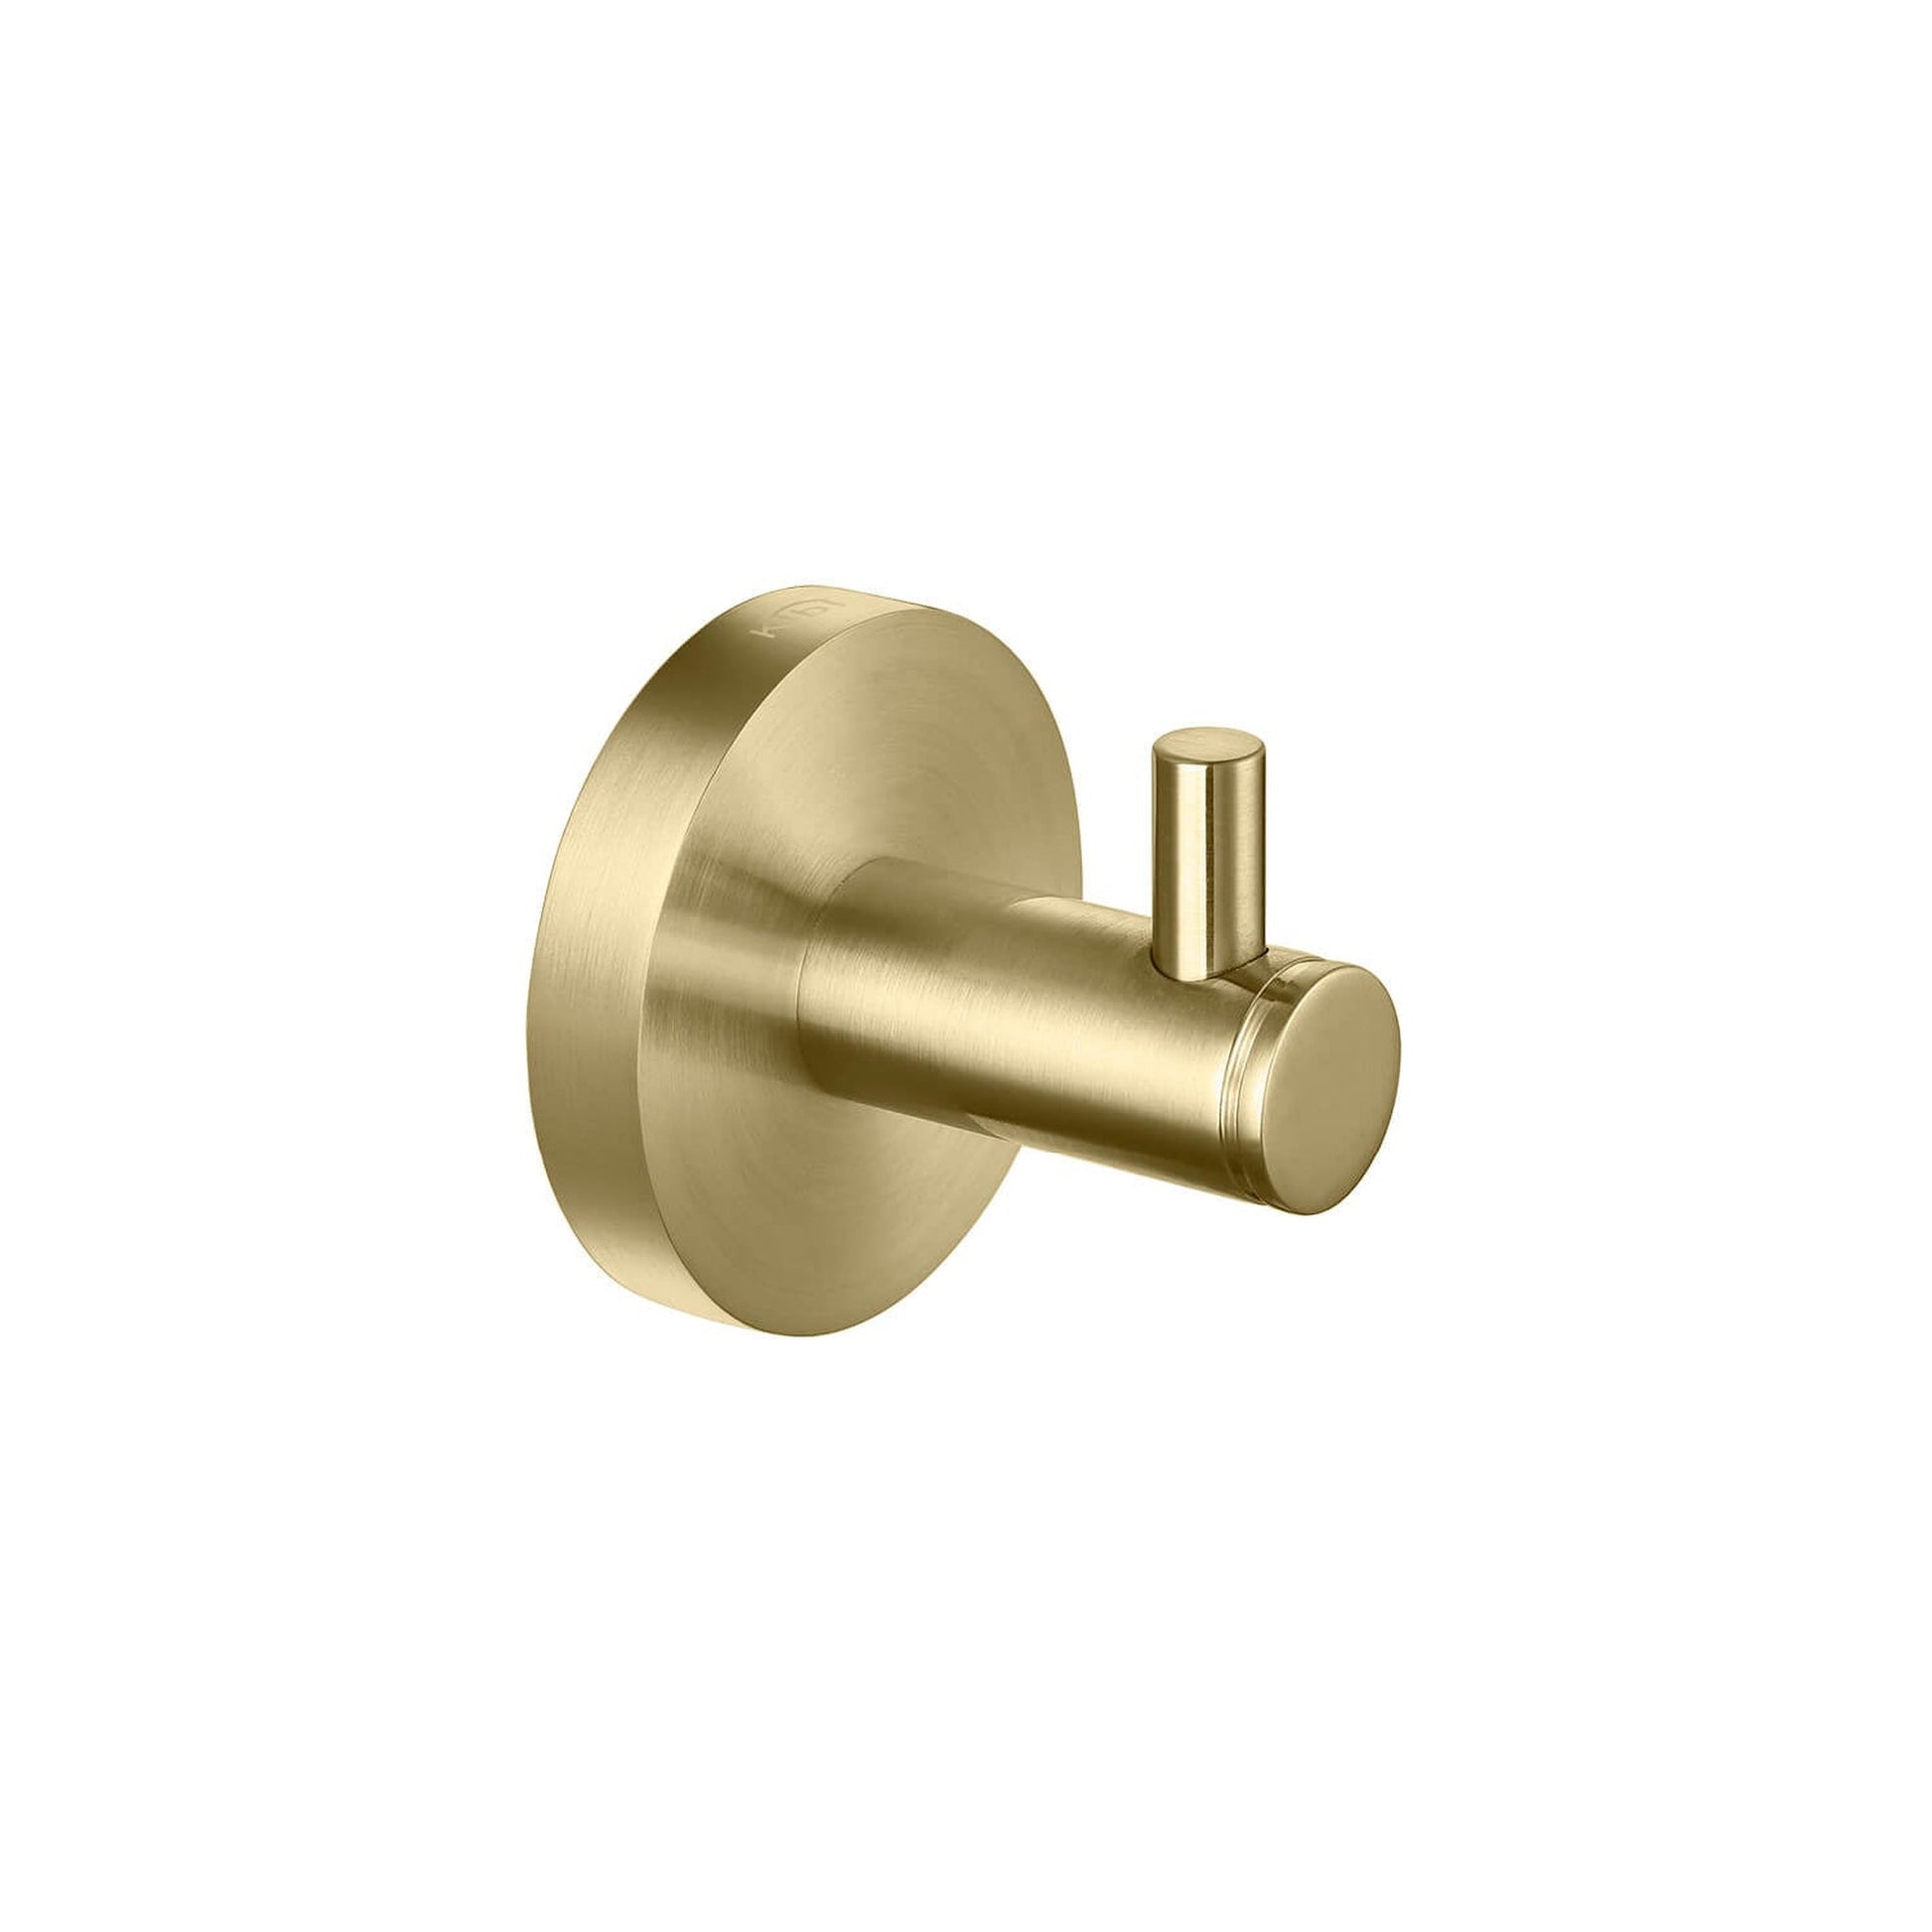 KIBI Circular Brass Bathroom Robe Hook in Brushed Gold Finish